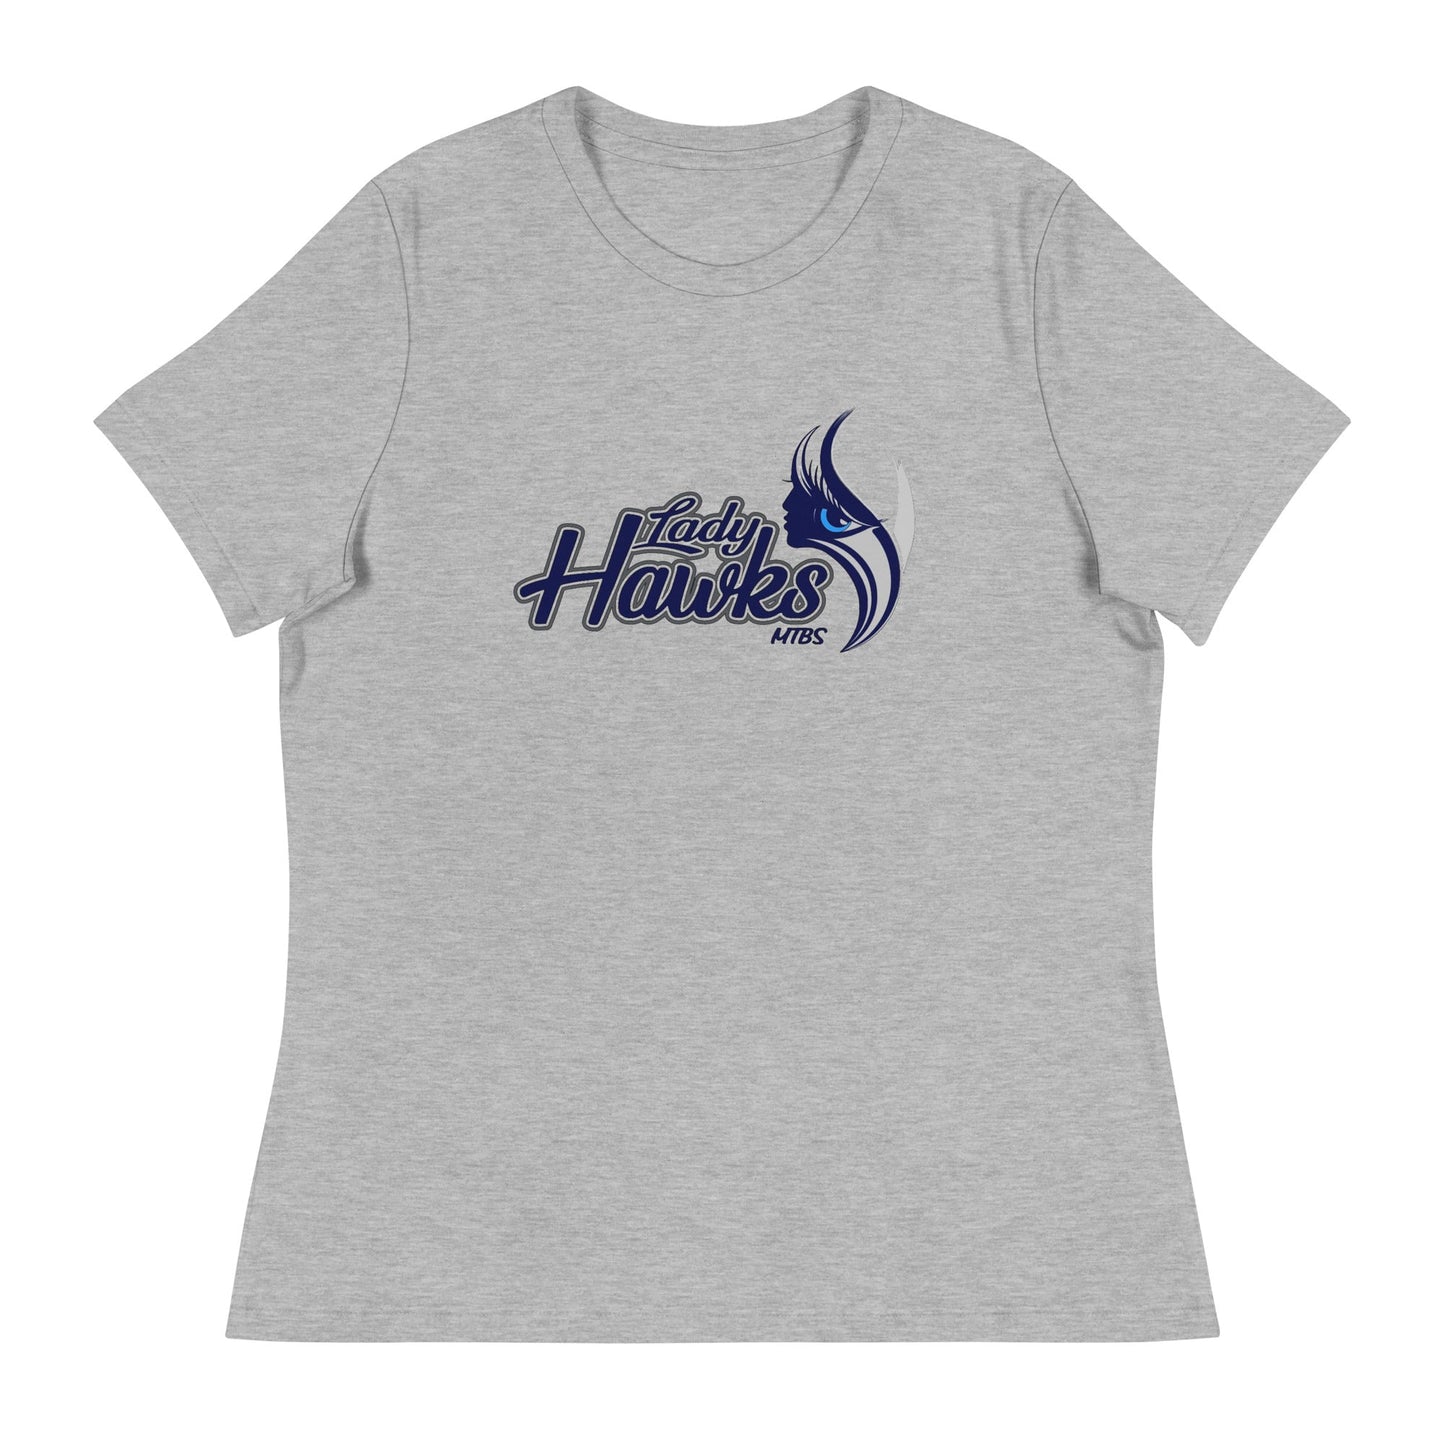 MTBS Lady Hawks Women's Relaxed T-Shirt Bat Club USA